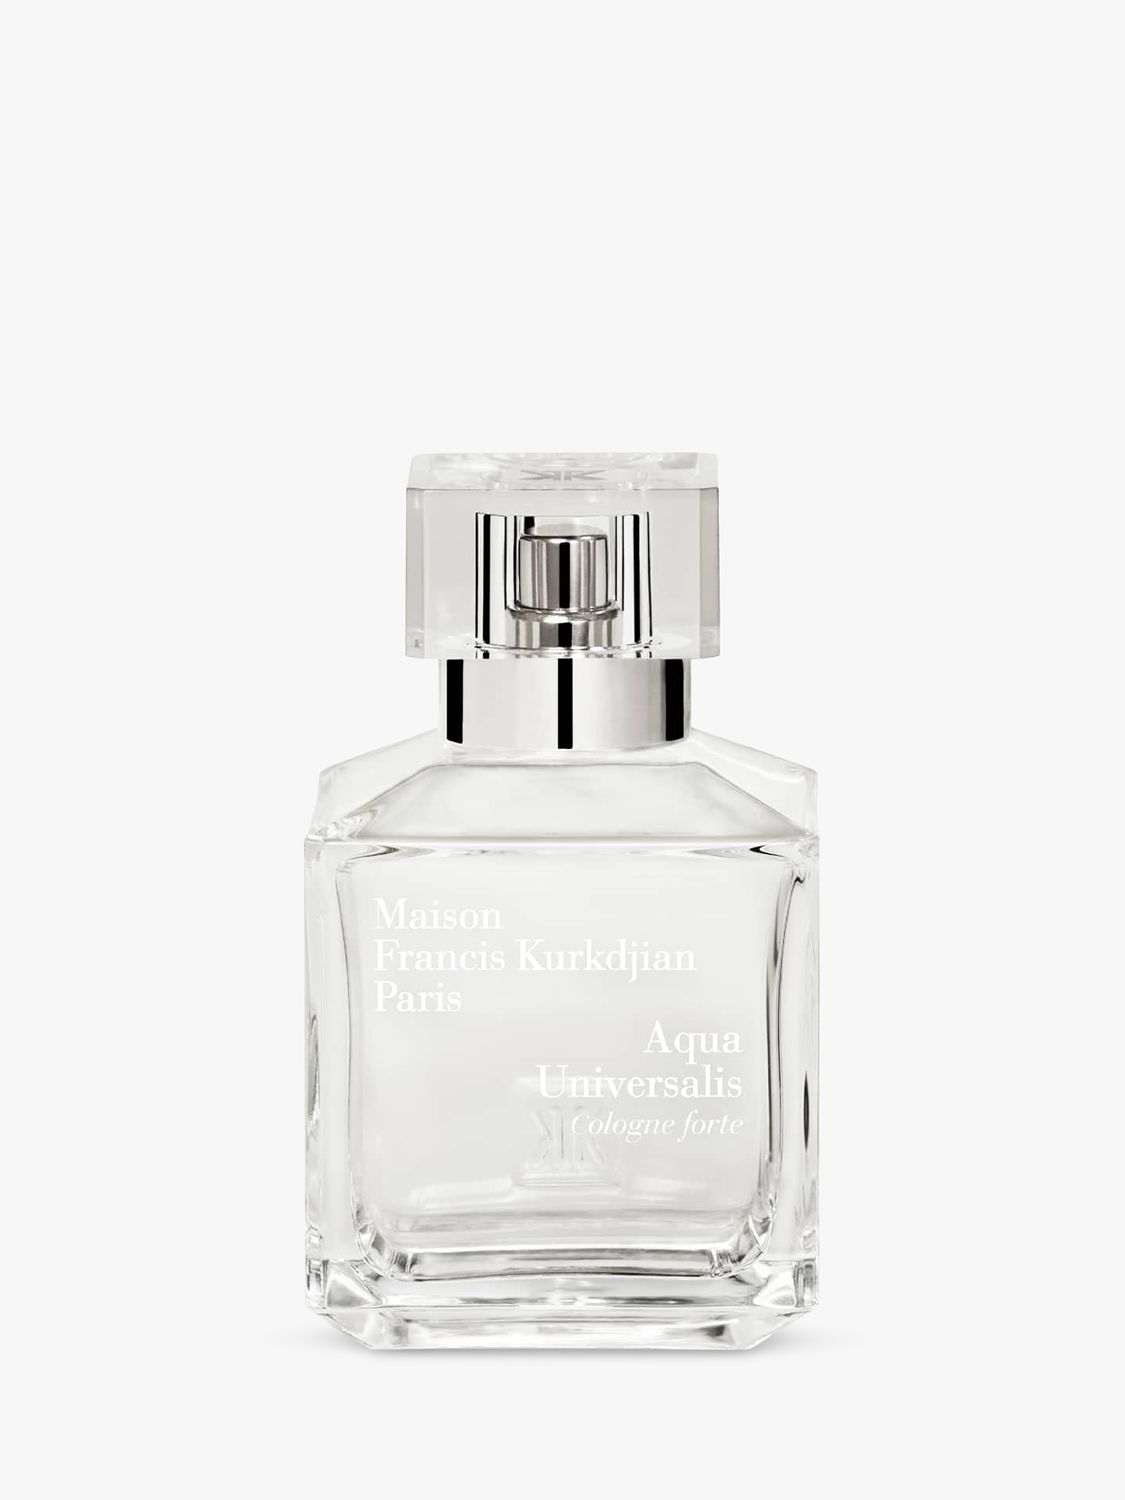 Maison Francis Kurkdjian Aqua Universalis Cologne Forte Eau de Parfum, 70ml